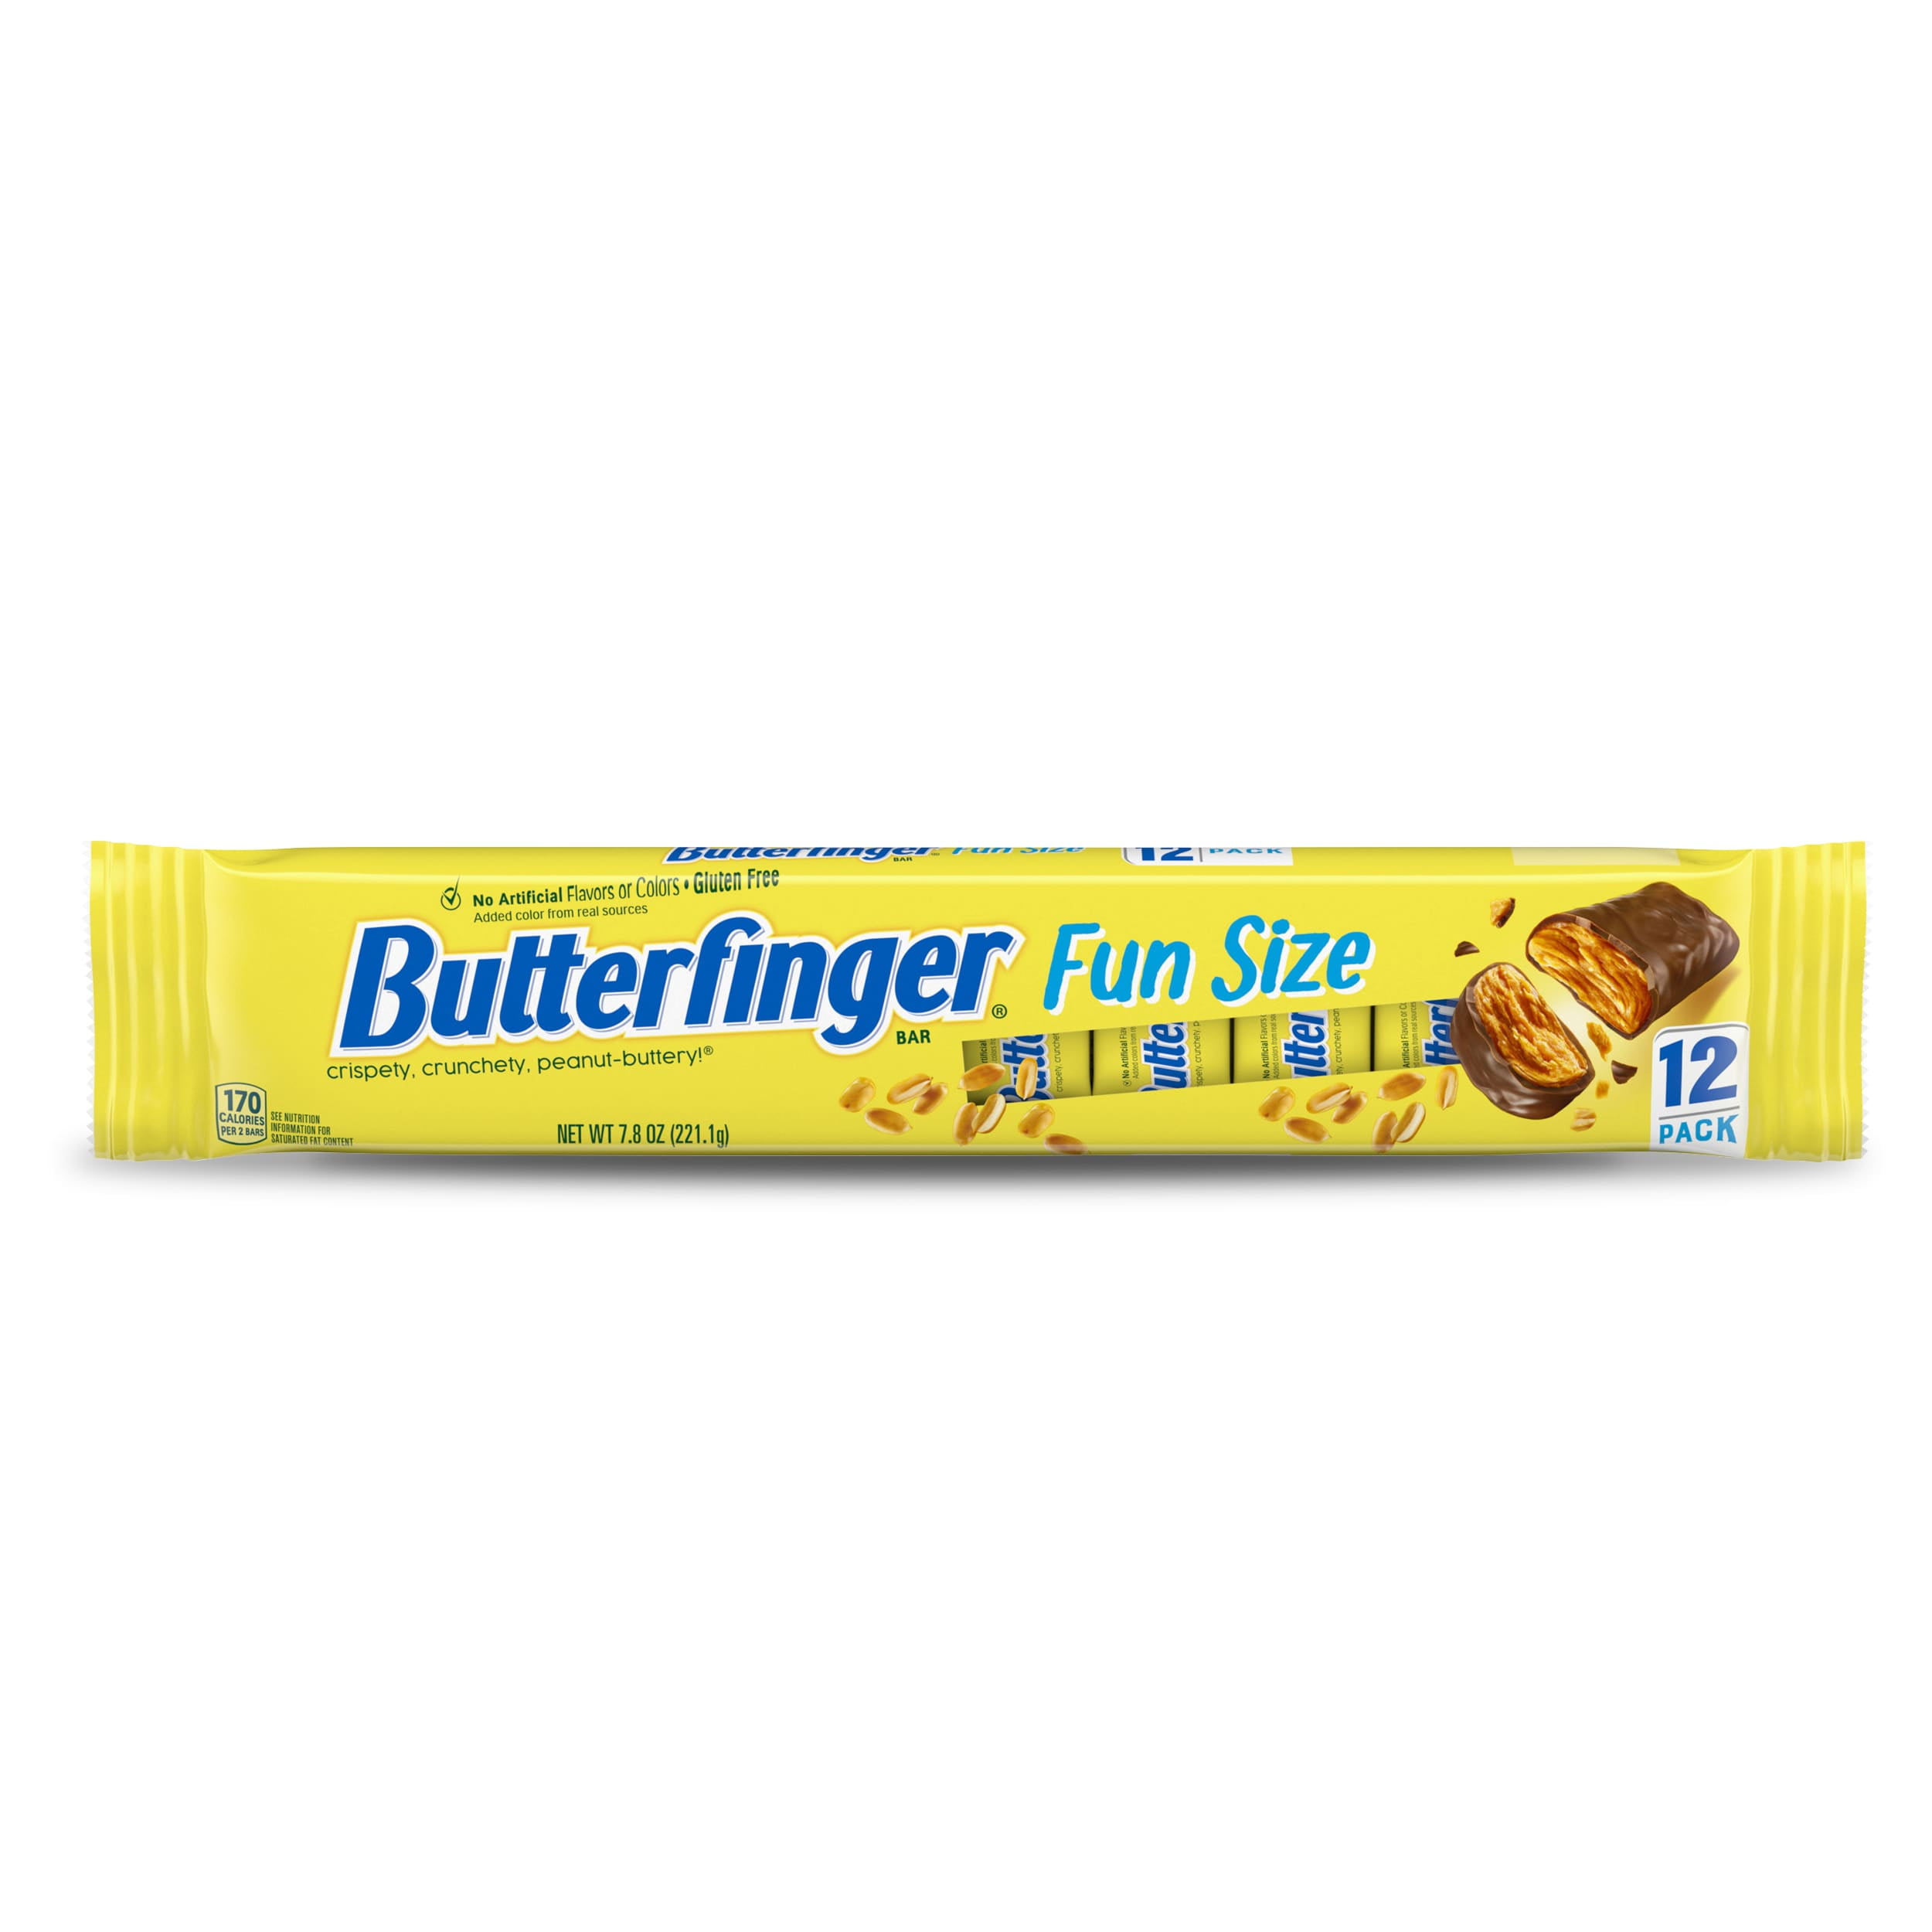 Butterfinger Chocolatey, Peanut-Buttery, Fun Size Candy Bars, Easter Basket Stuffers, 7.8 oz